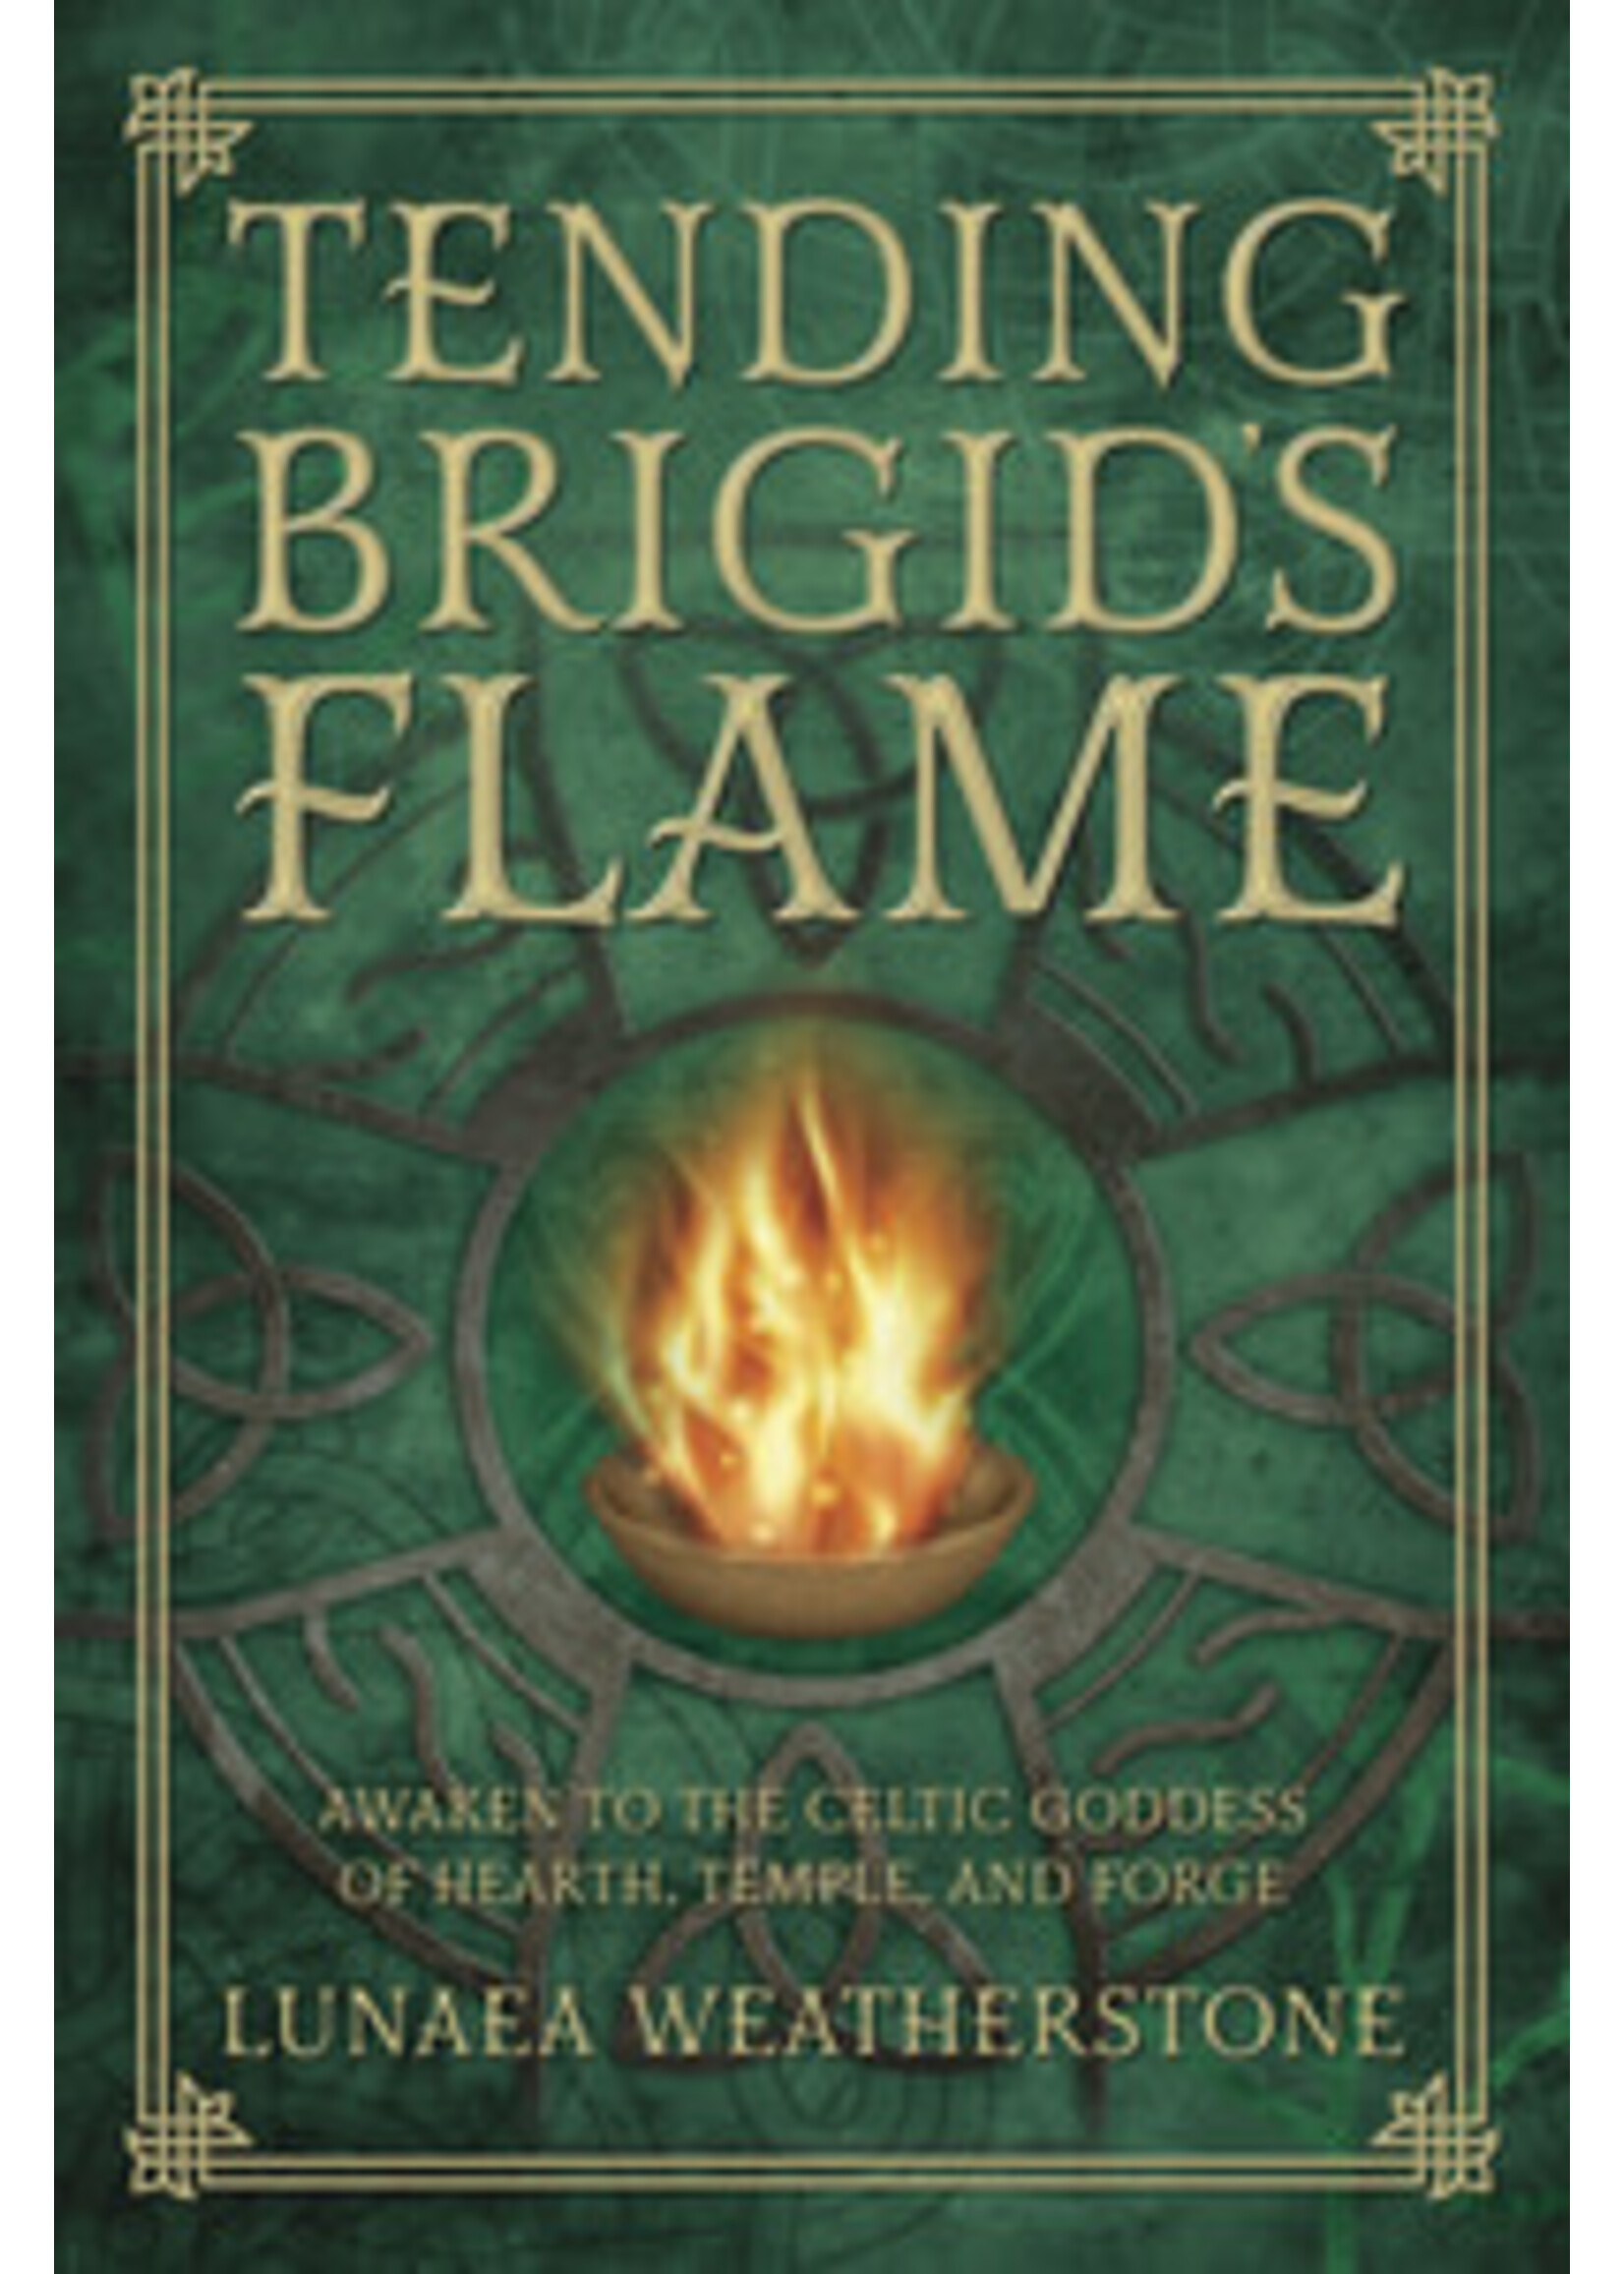 Tending Brigid's Flame by Lunaea Weatherstone